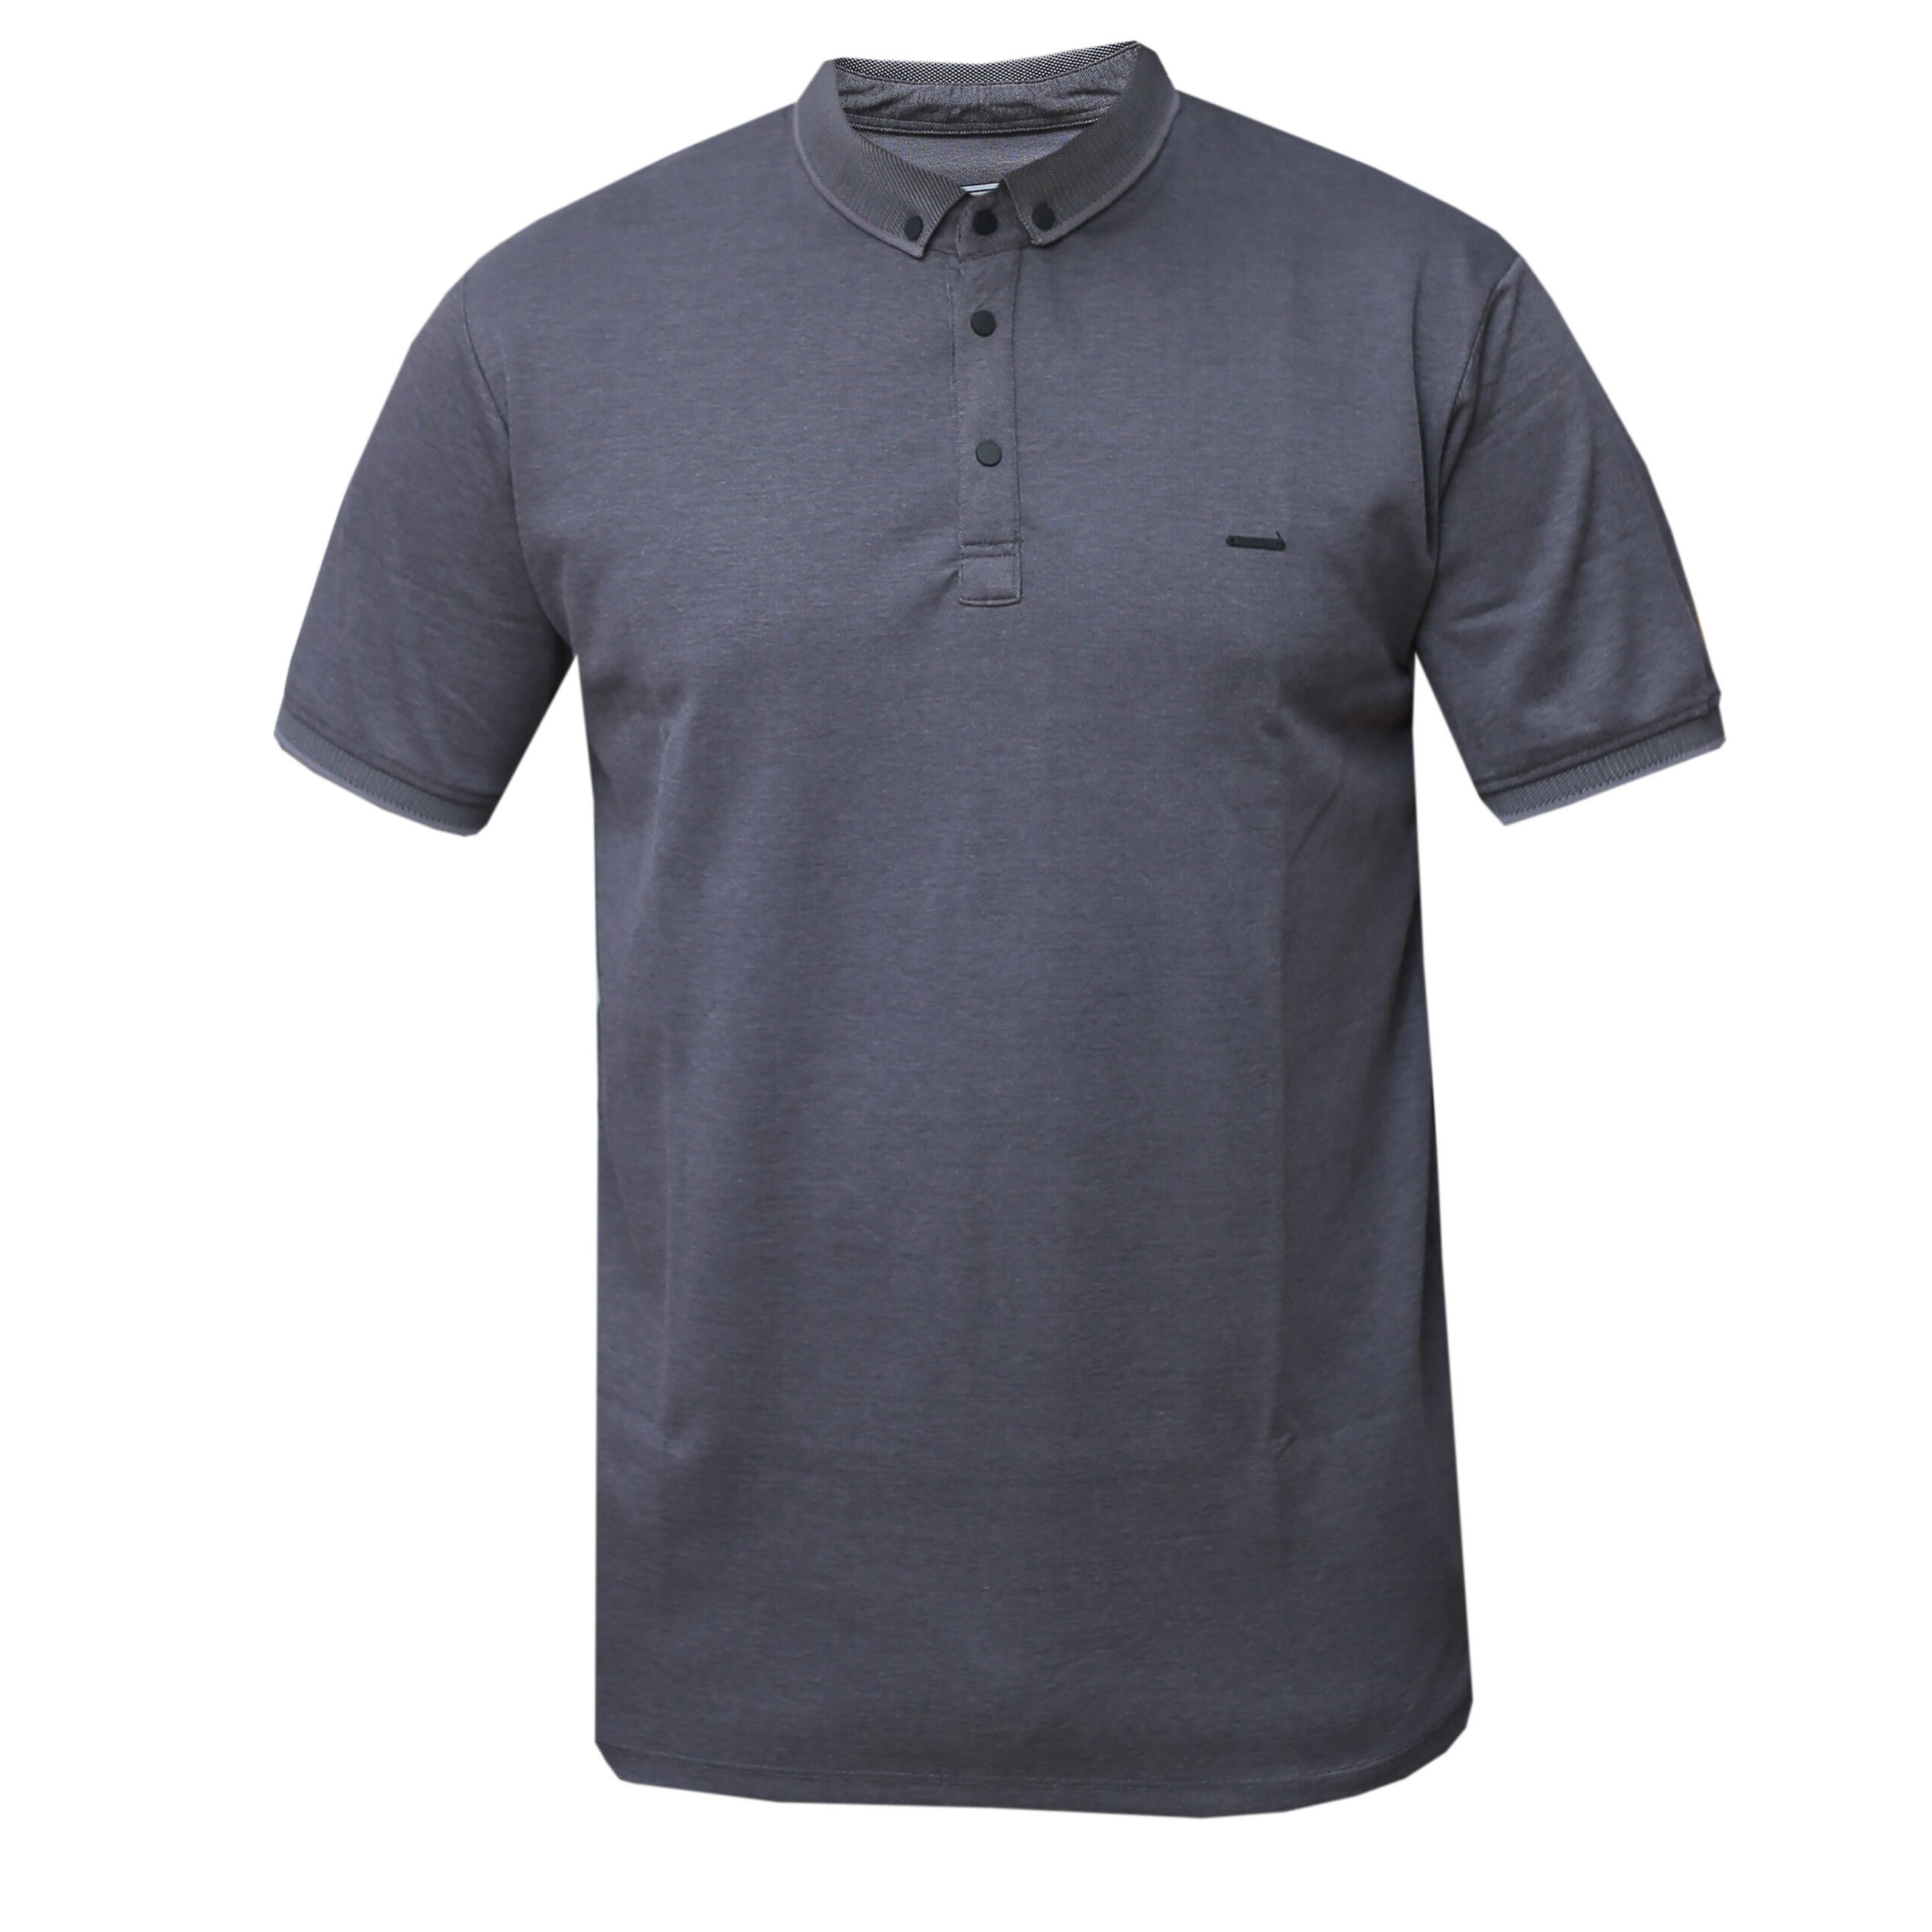 Collar T-Shirt For Men - Men's Polos Casual Wear